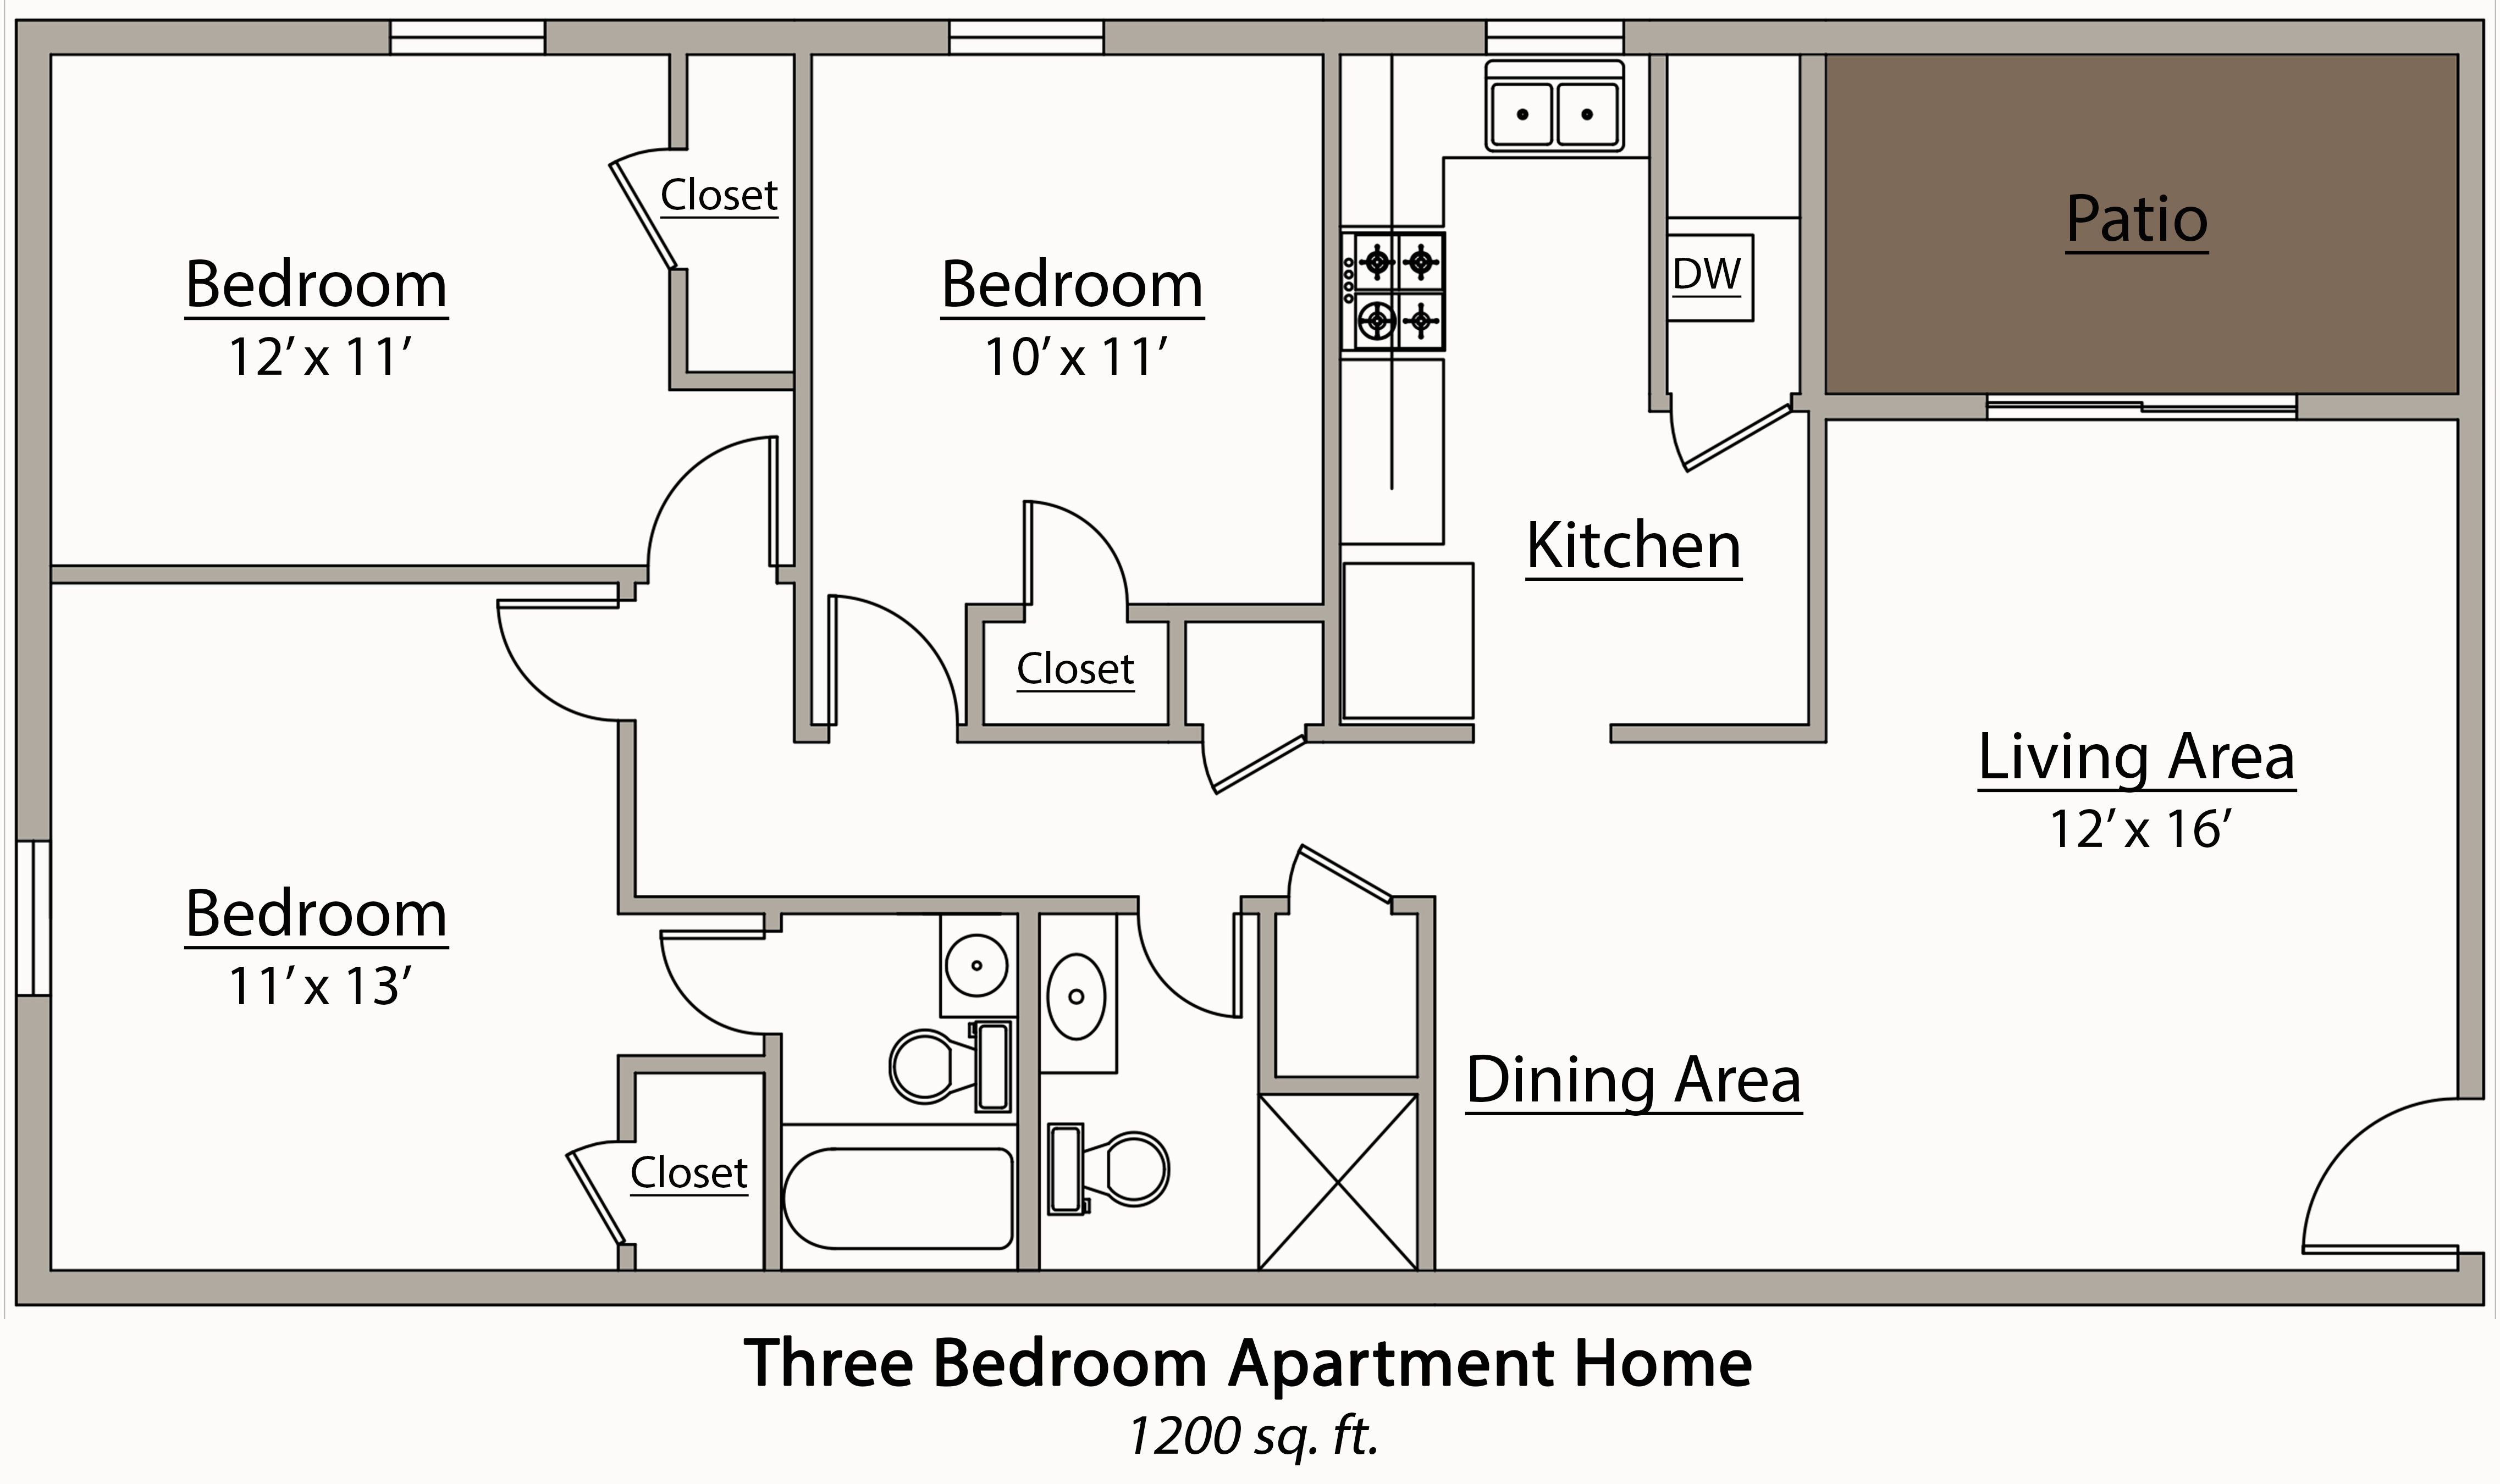 3 Bedroom Apartment Floor Plan - Carpet Vidalondon